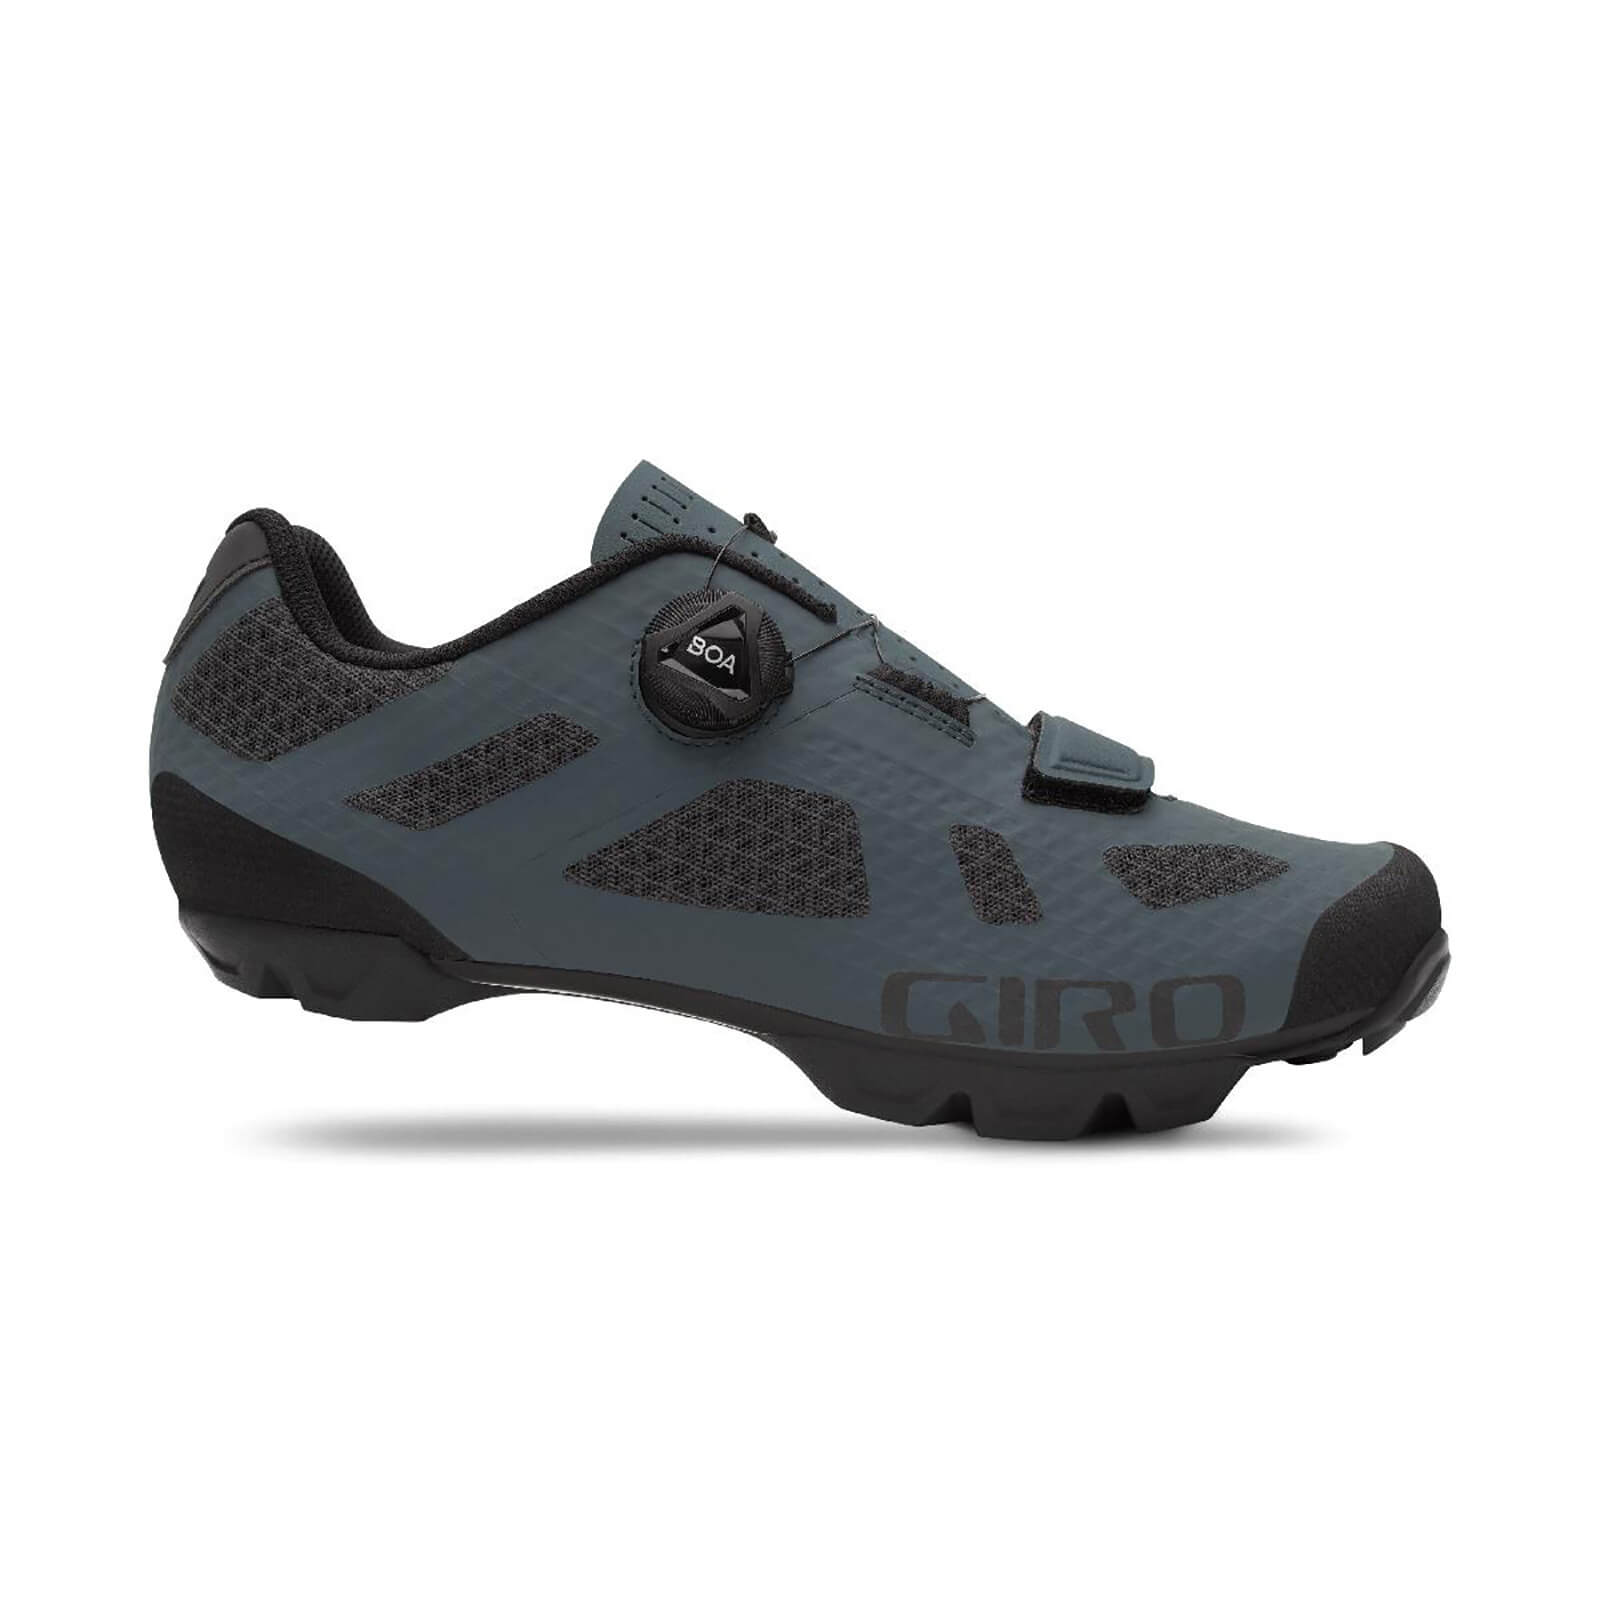 Giro Rincon MTB Shoes - EU 46 - Port Grey